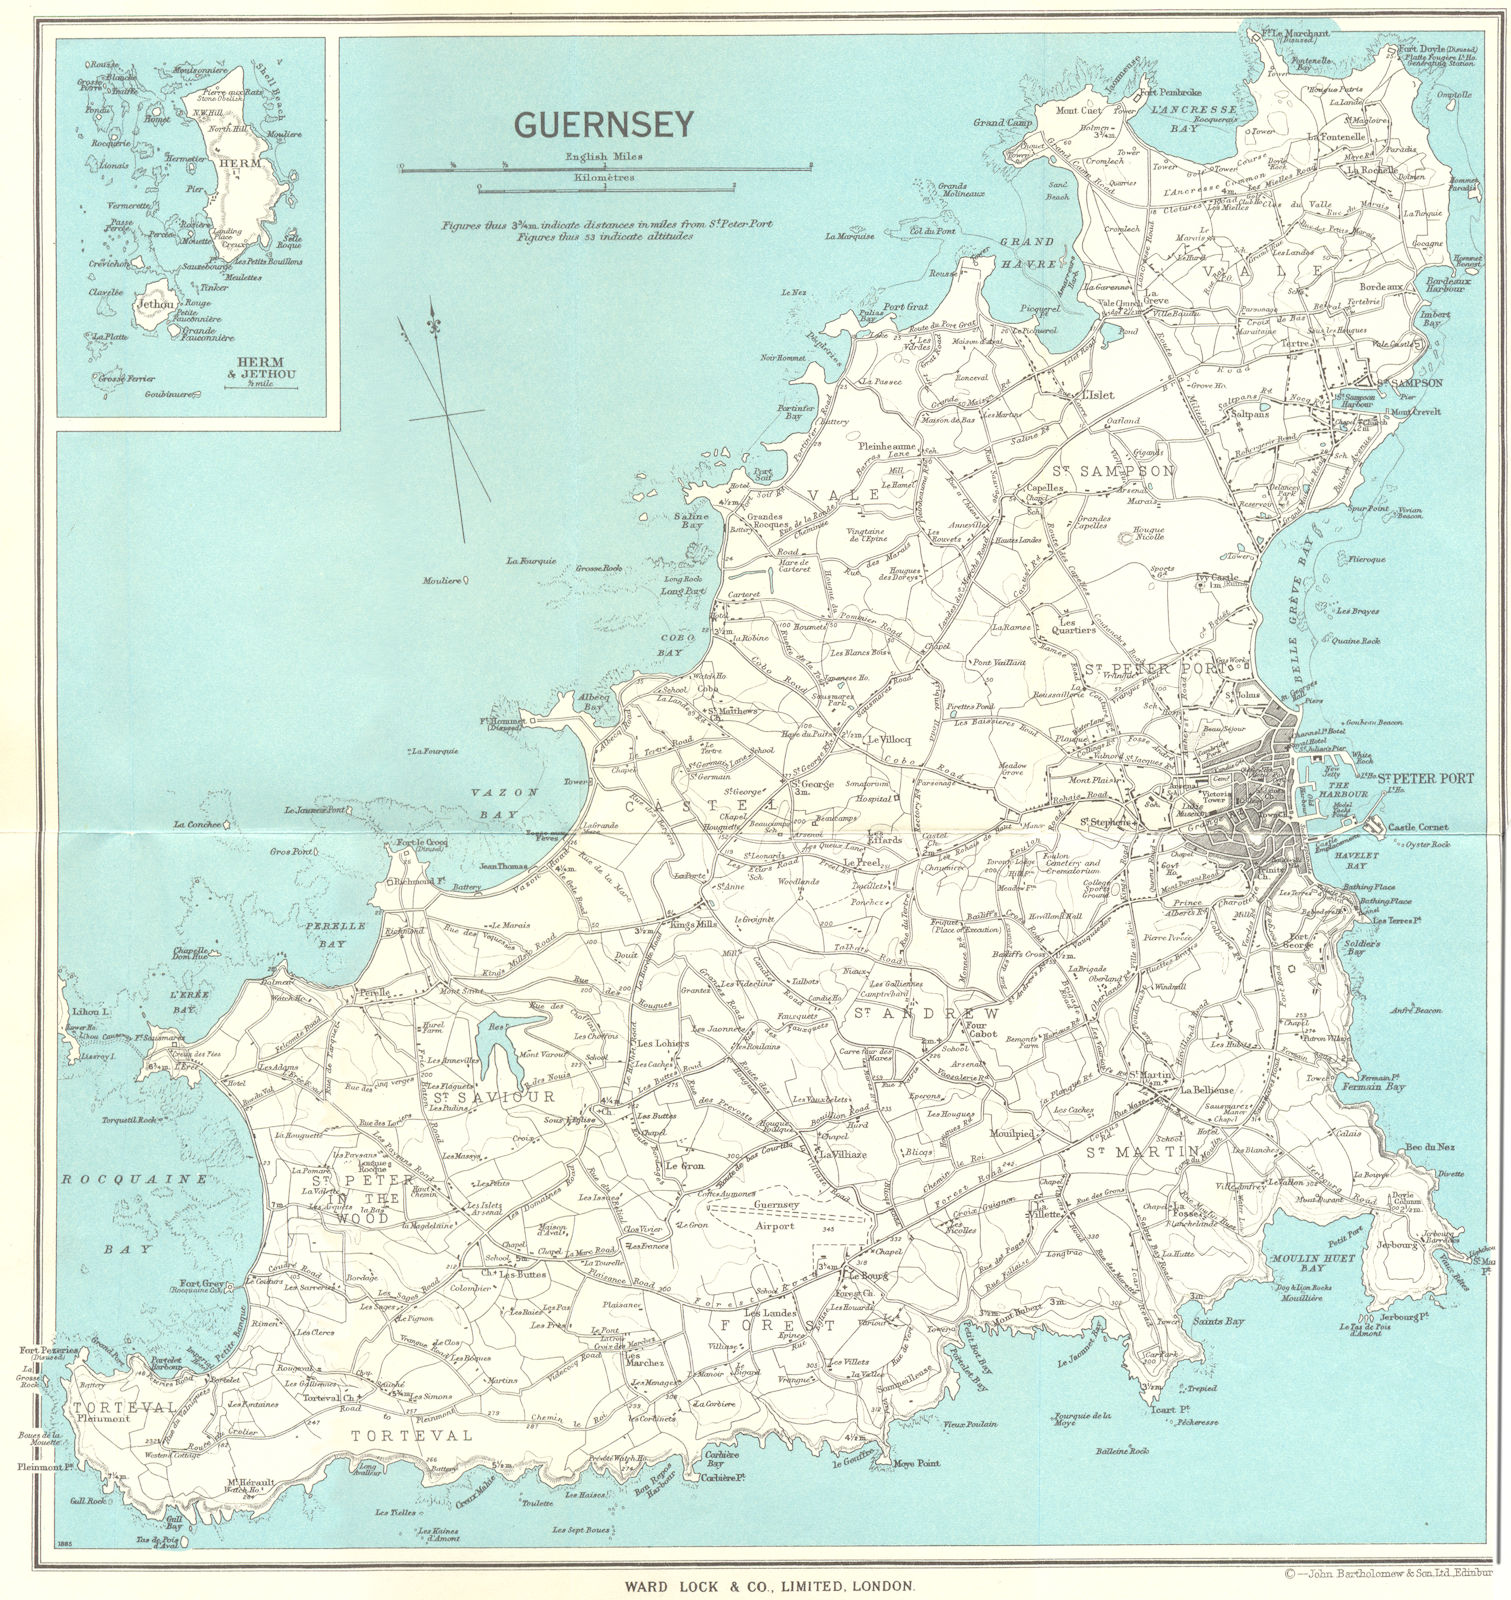 GUERNSEY inset Herm & Jethou. St Peter Port. Channel Islands. WARD LOCK 1964 map